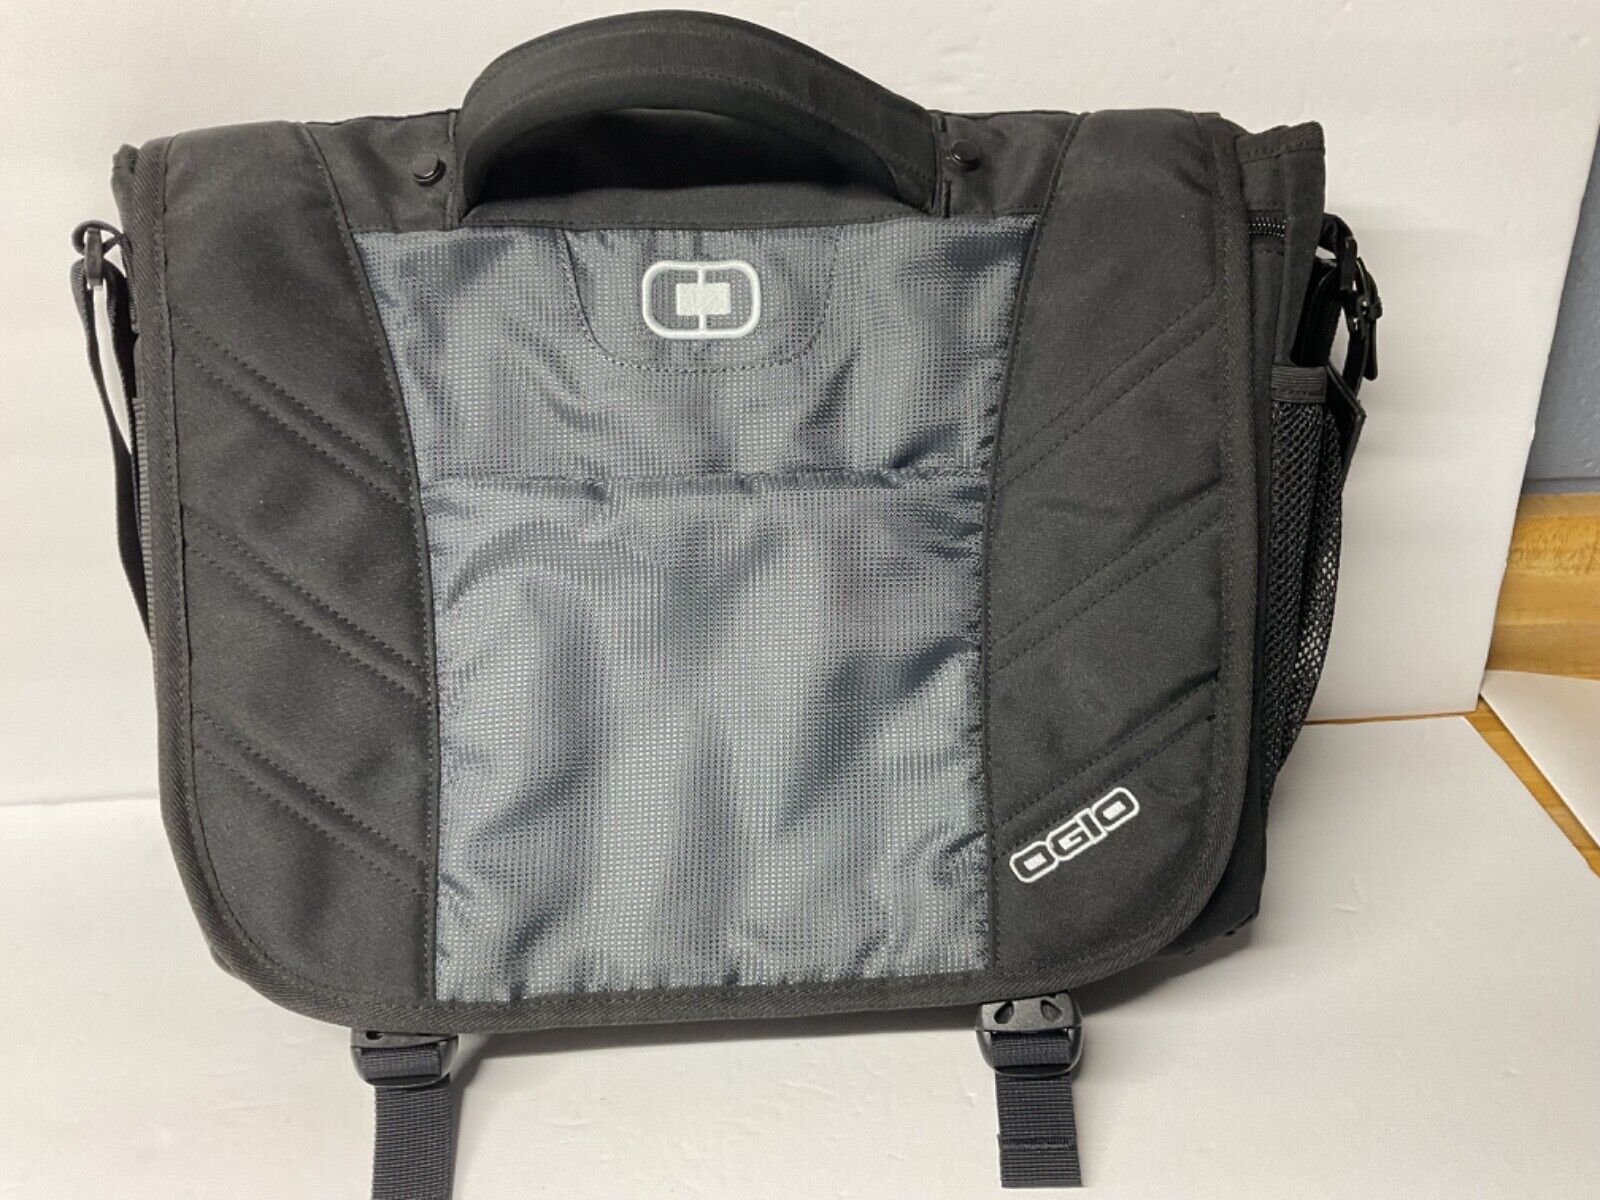 Ogio  Messenger / Computer Bag Black with Identification Tag